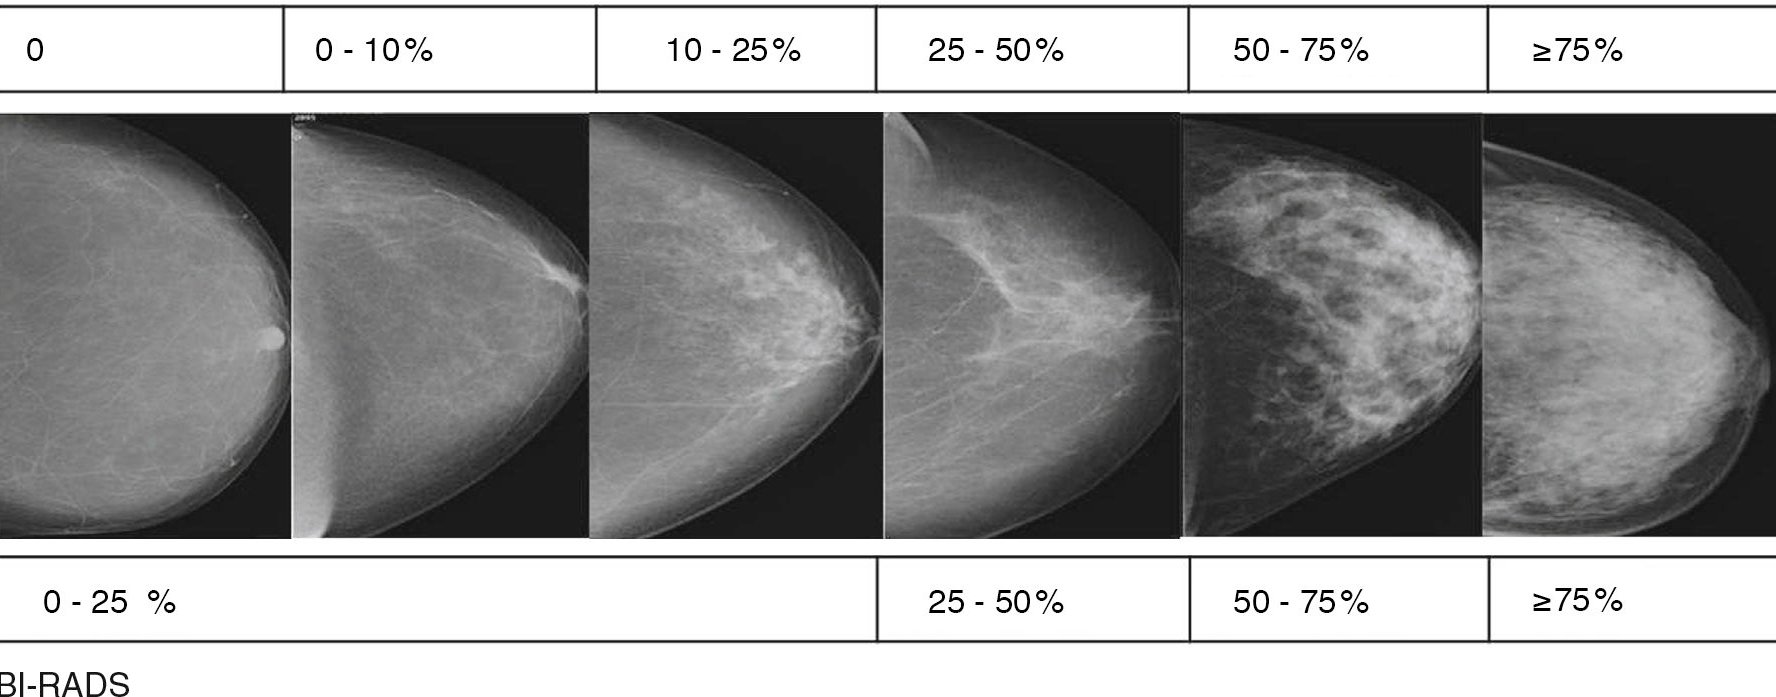 Bl rads 2. Маммография молочных желез bi rads 4. Фиброзно кистозная мастопатия молочной железы bi-rads-4a. Маммография классификация bi-rads. Bi-rads 3 молочной железы маммограмма.